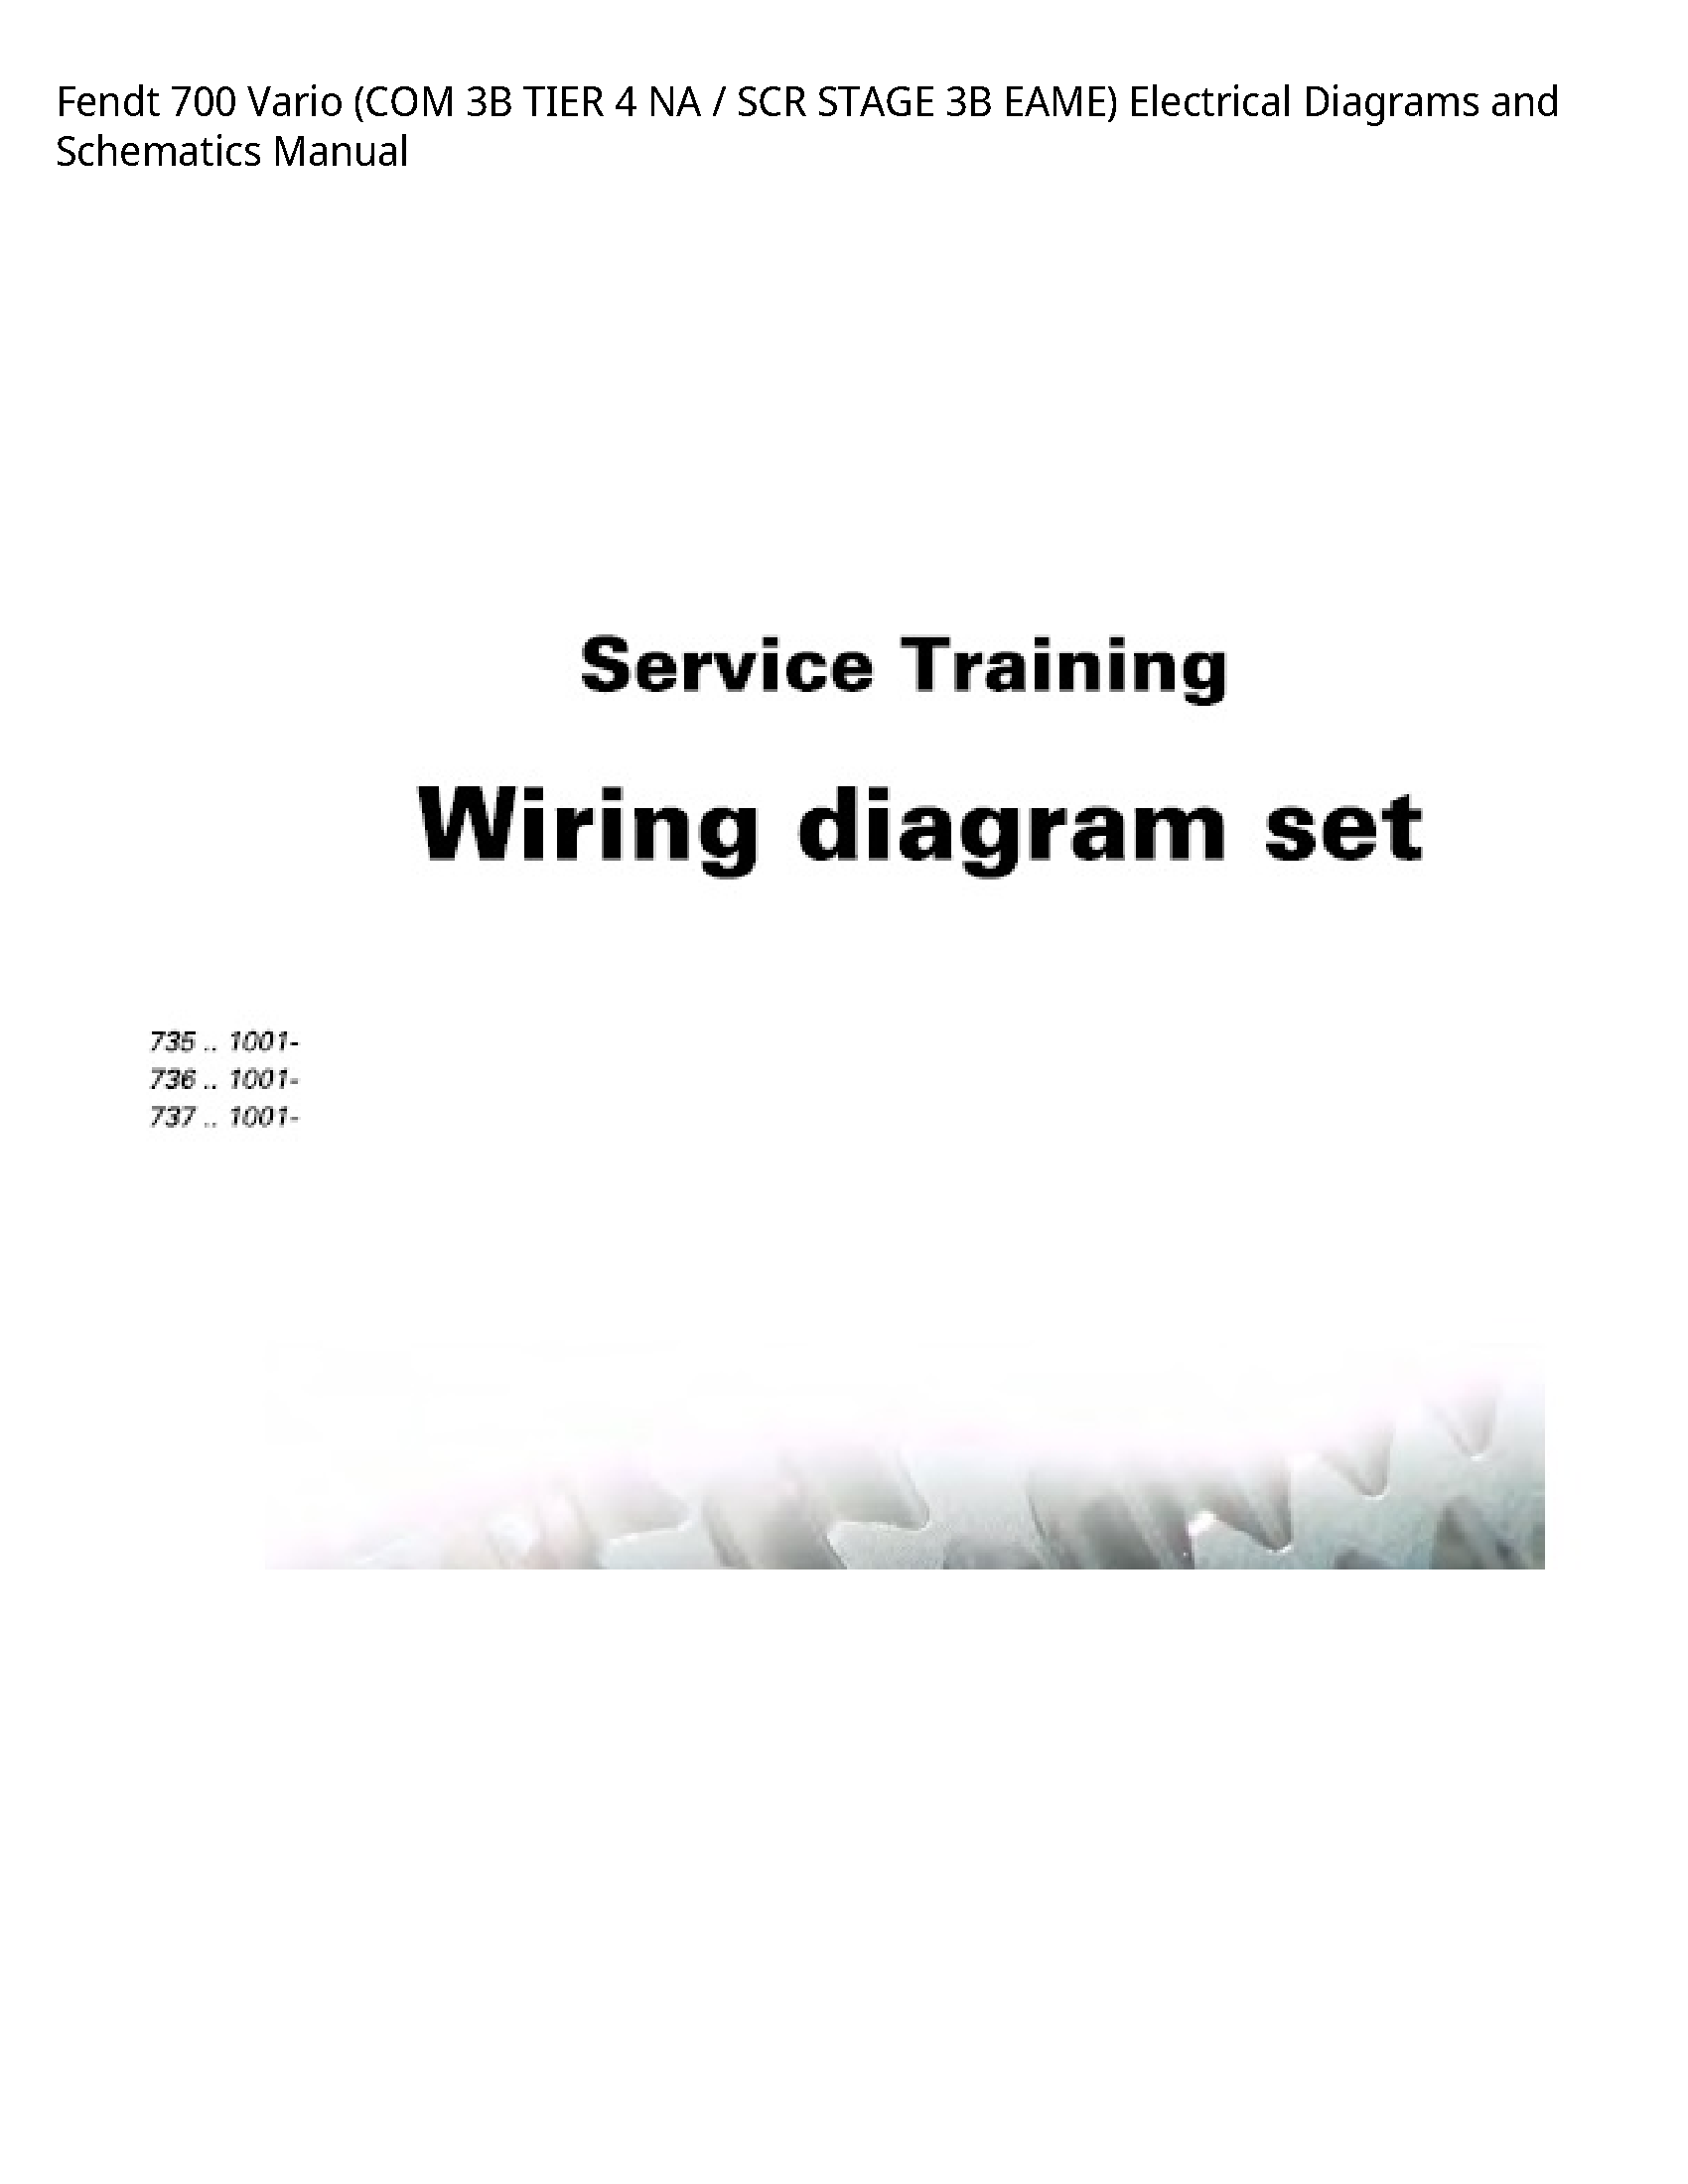 Fendt 700 Vario (COM TIER NA SCR STAGE EAME) Electrical Diagrams  Schematics manual